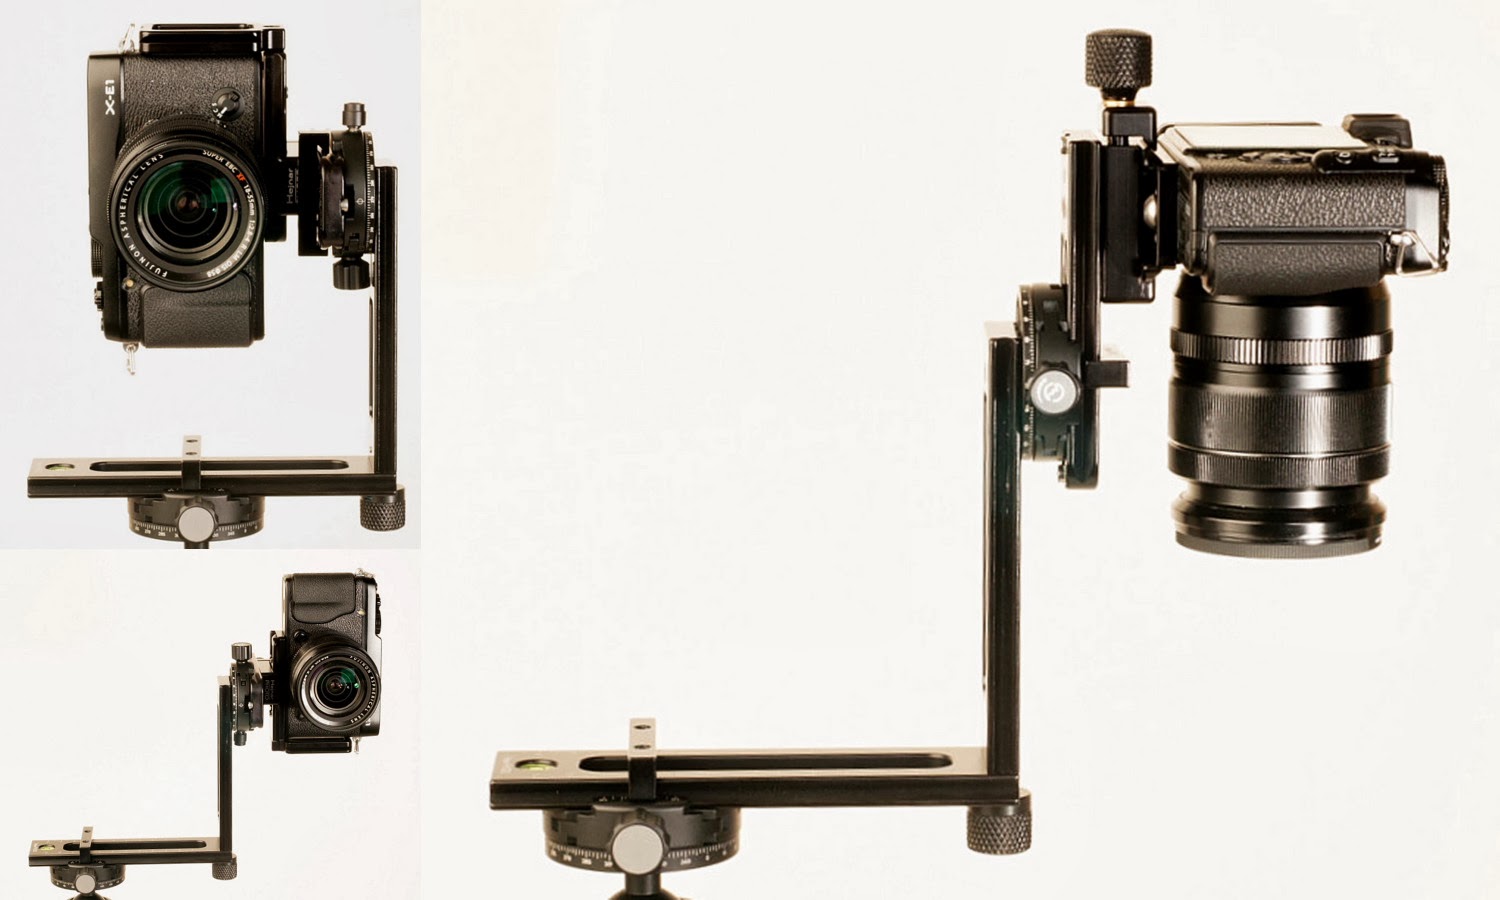 Fujifilm X-E1 mounted on Hejnar 4/3 Quick Connect Set - Nadir position